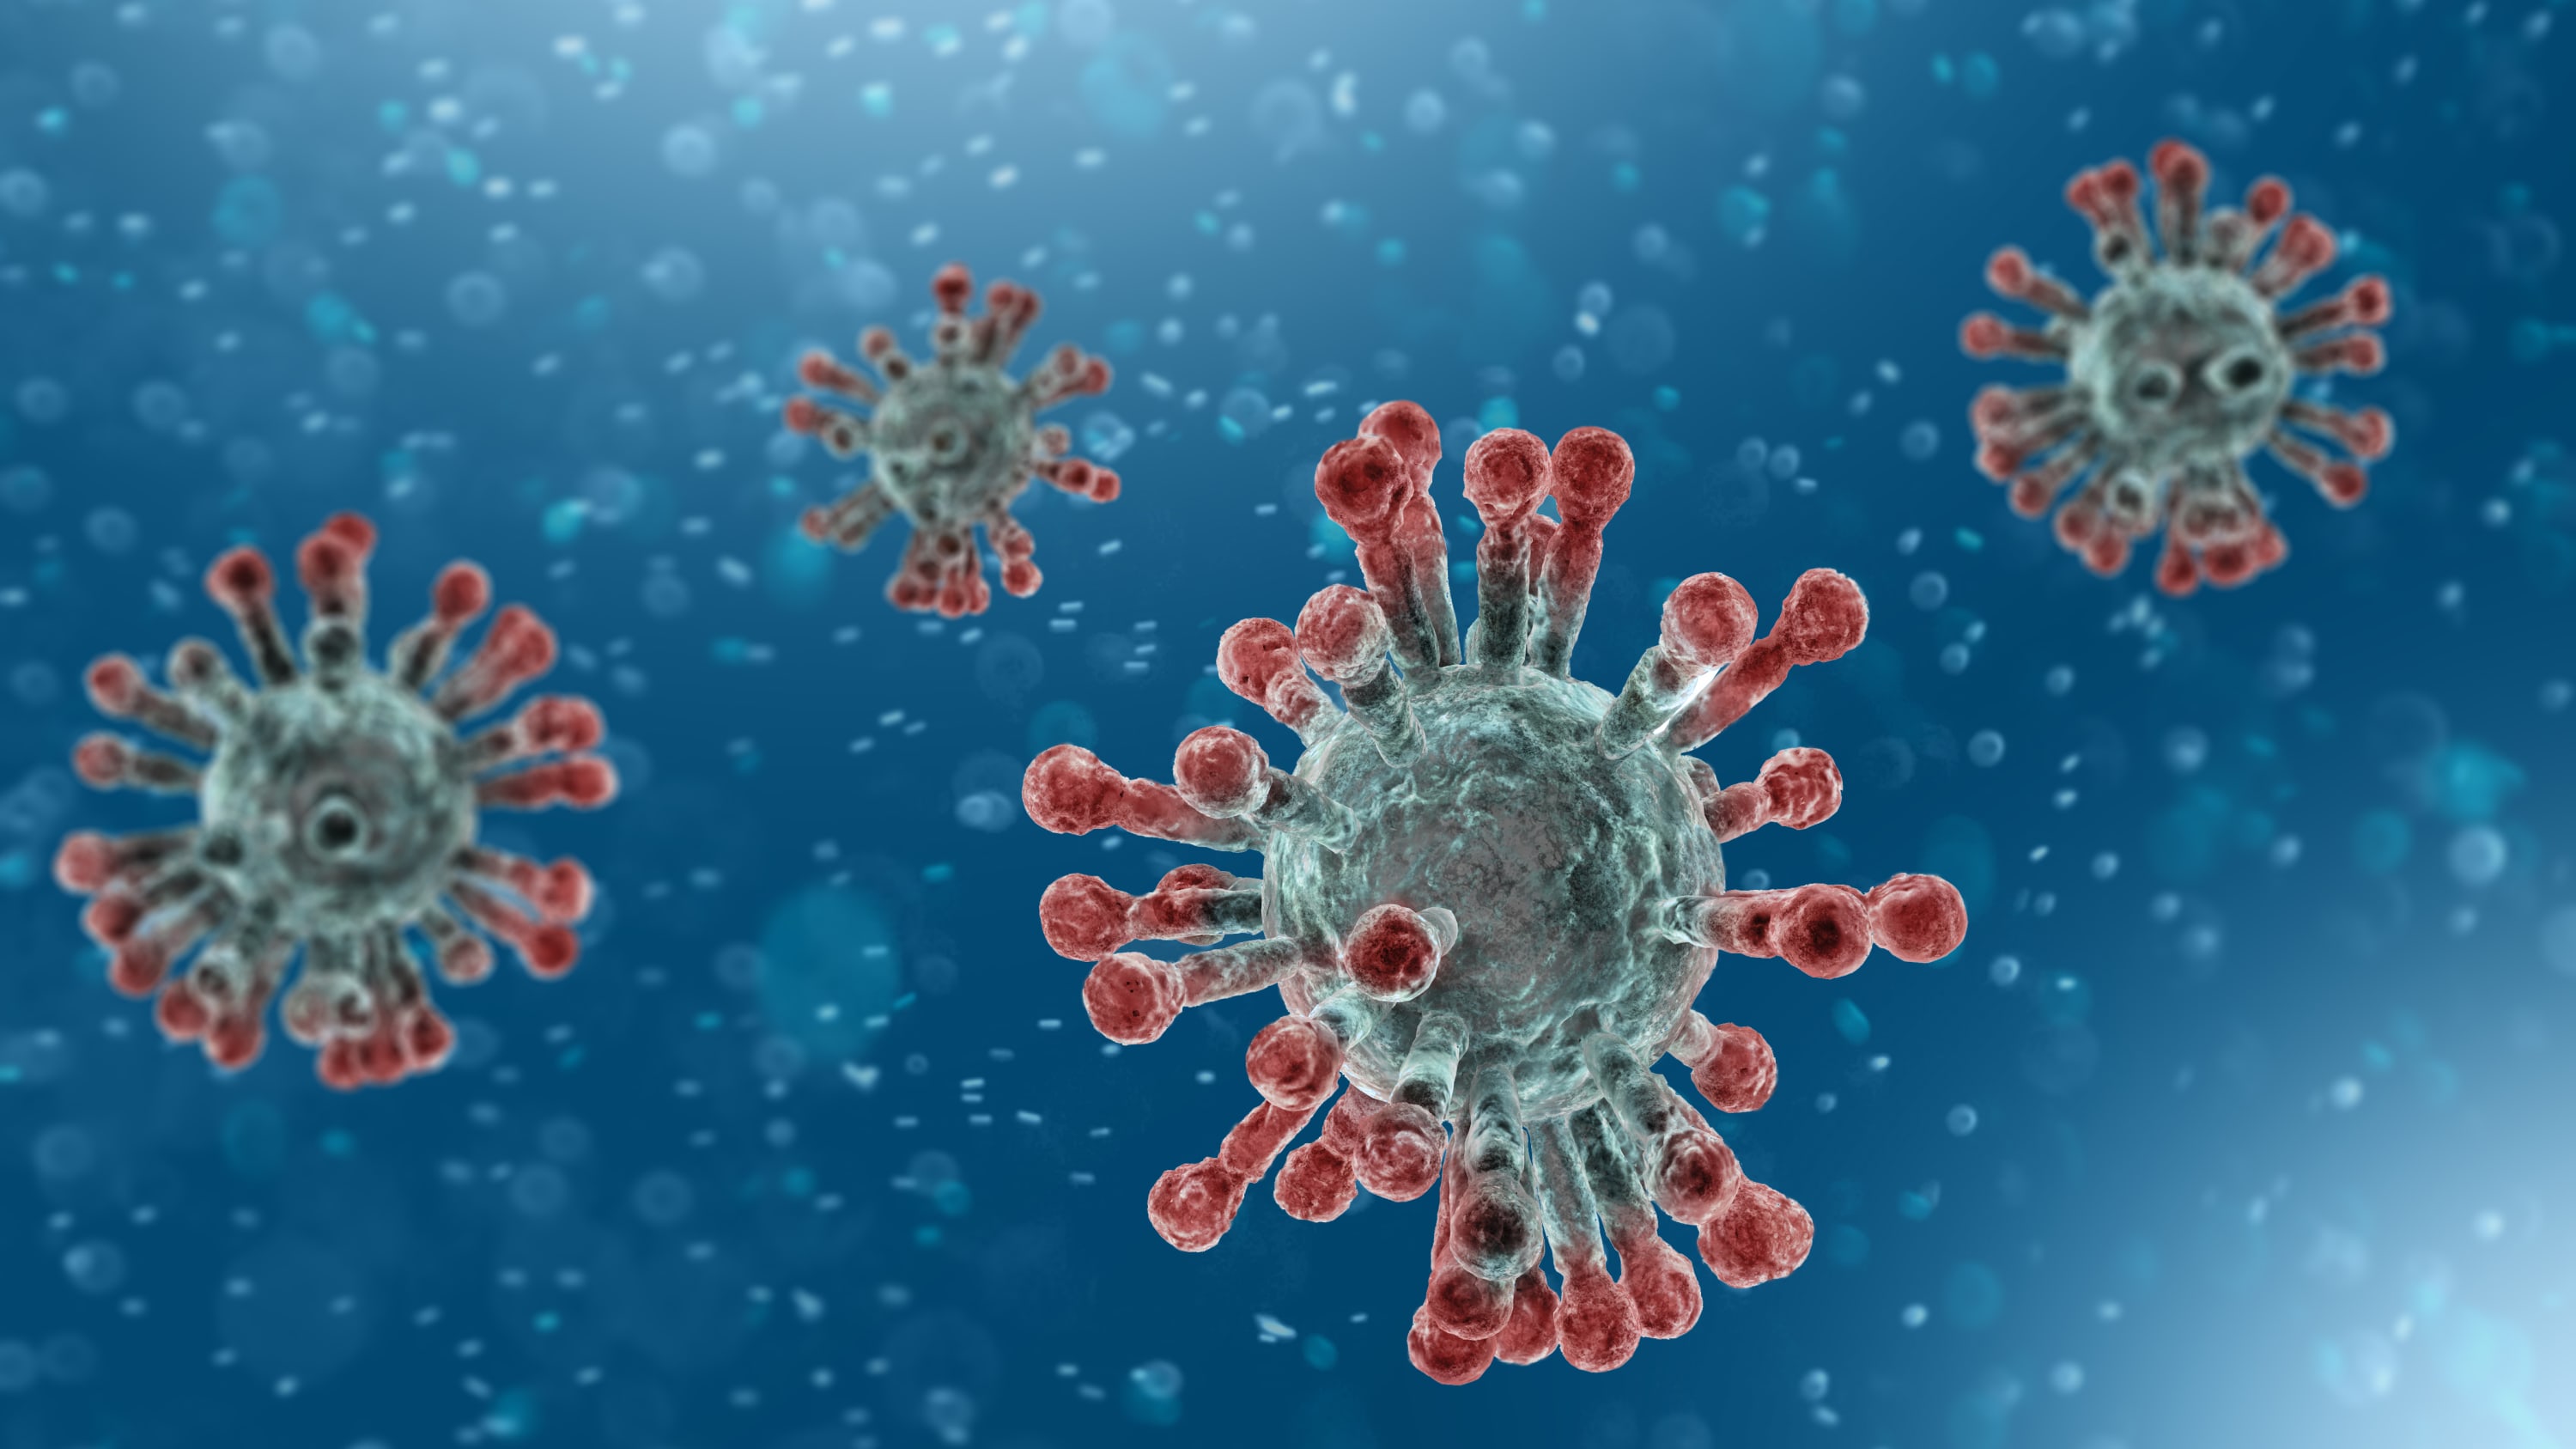 Microscopic view of Coronavirus, similar to the one causing COVID-19